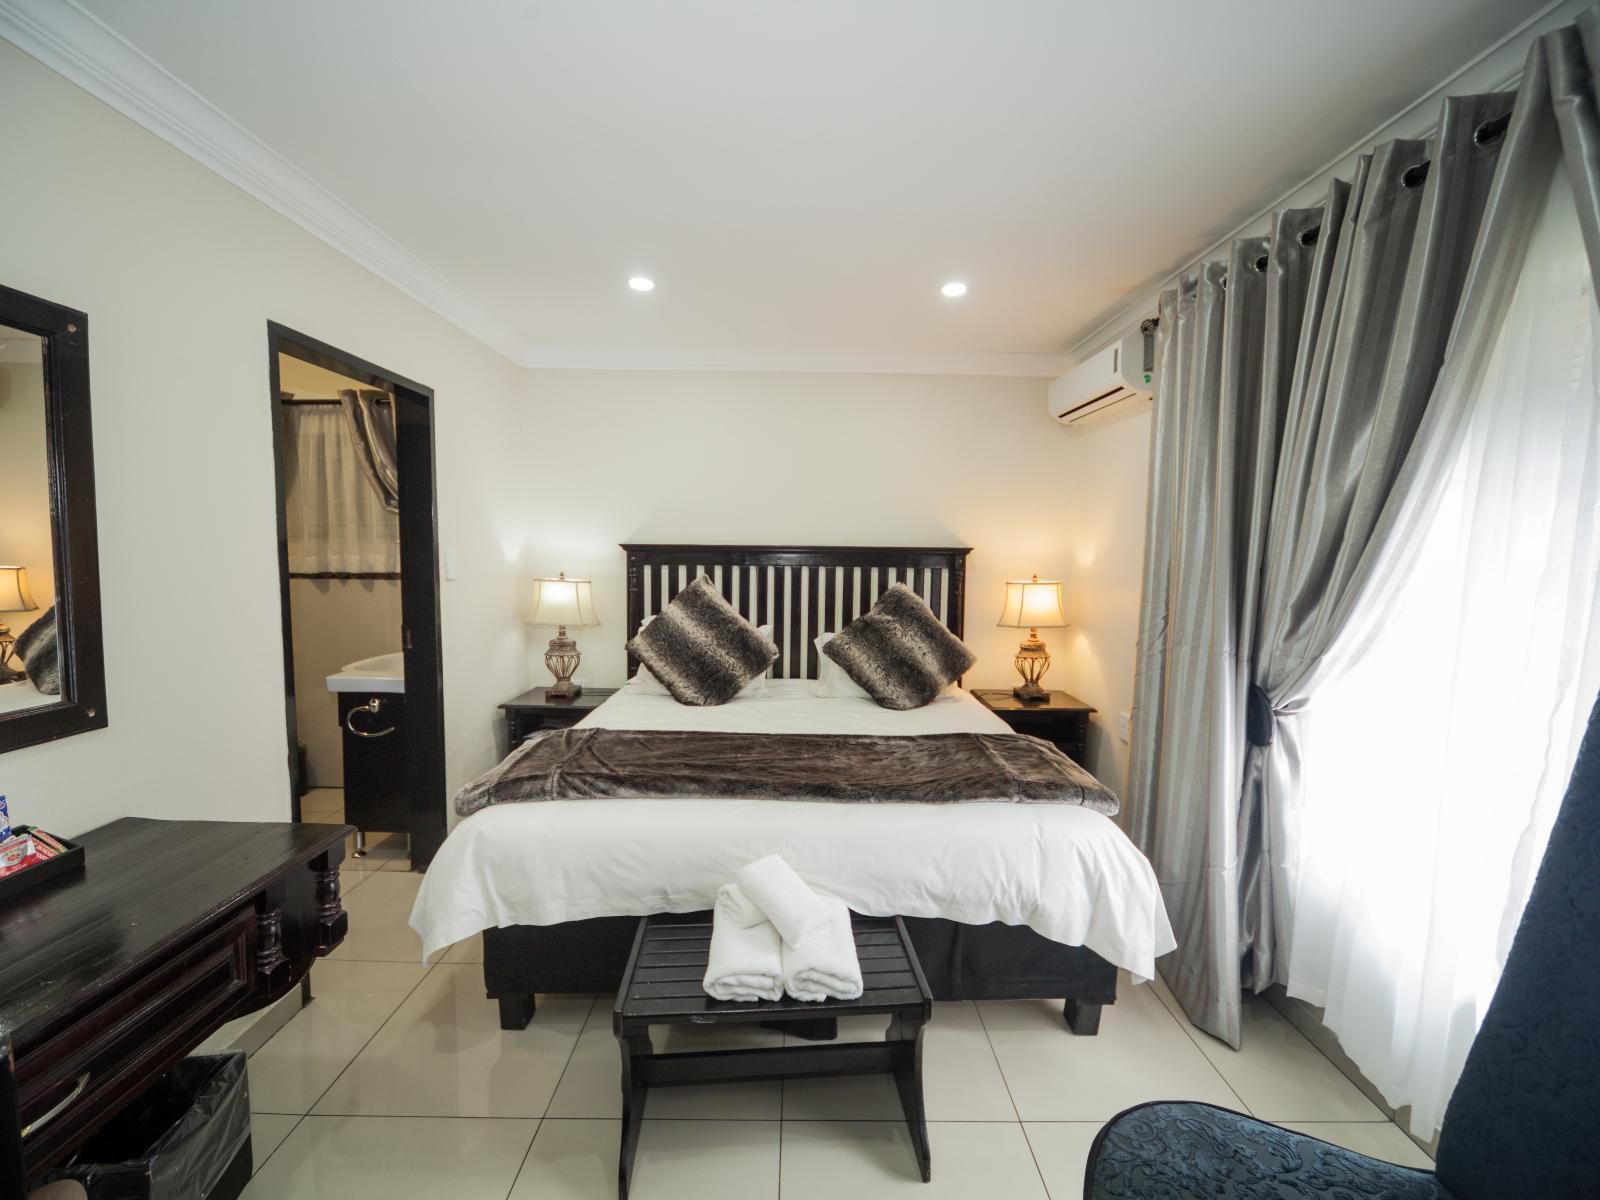 Dunwoodie Travel Lodge Waverley Pretoria Pretoria Tshwane Gauteng South Africa Unsaturated, Bedroom